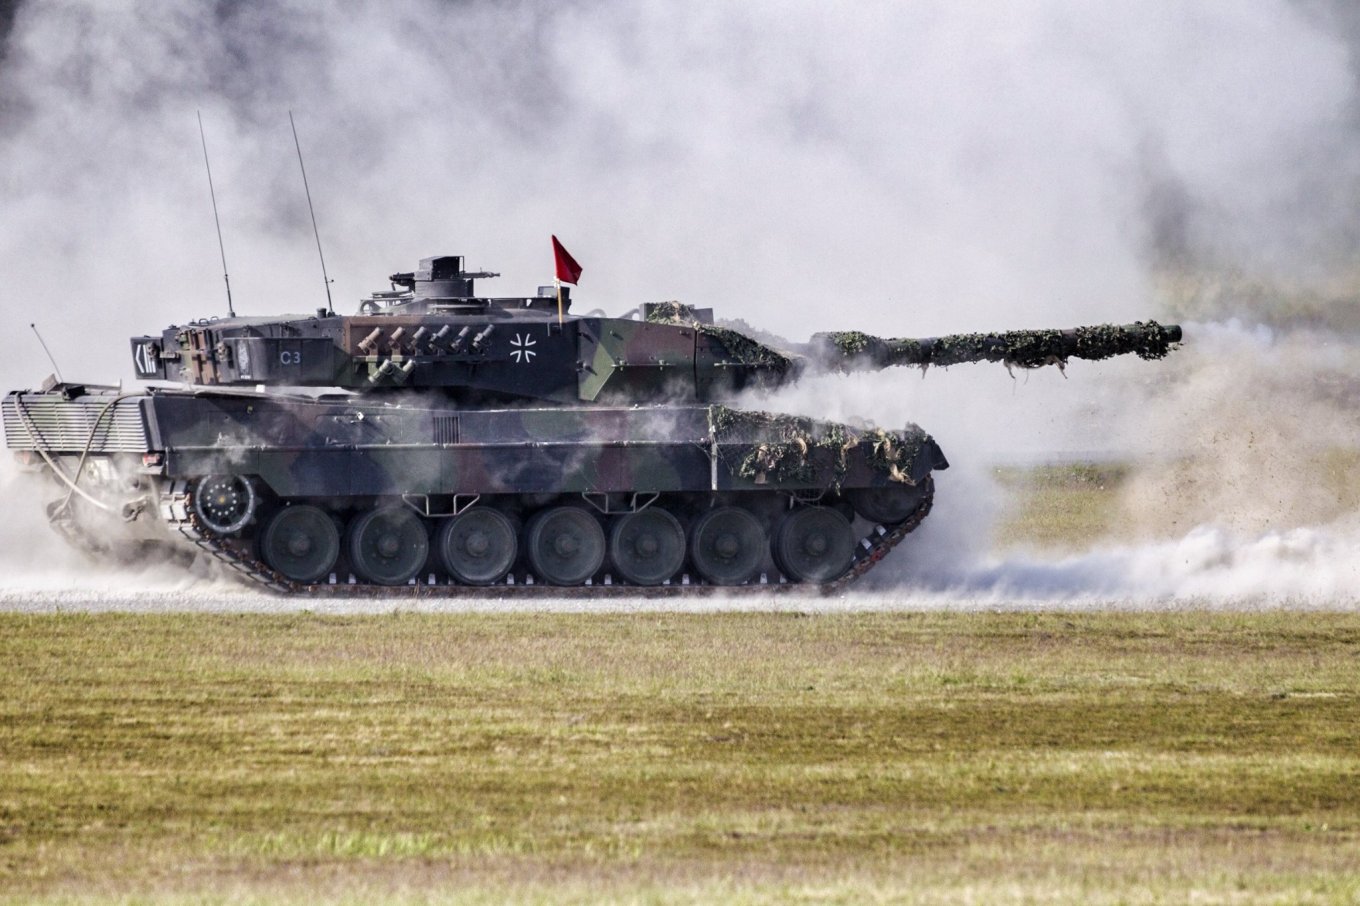 Leopard 2A6 tank, Leopard 2 Tanks Go to Ukraine, How Many German Tanks Reinforce the Ukrainian Army, Defense Express